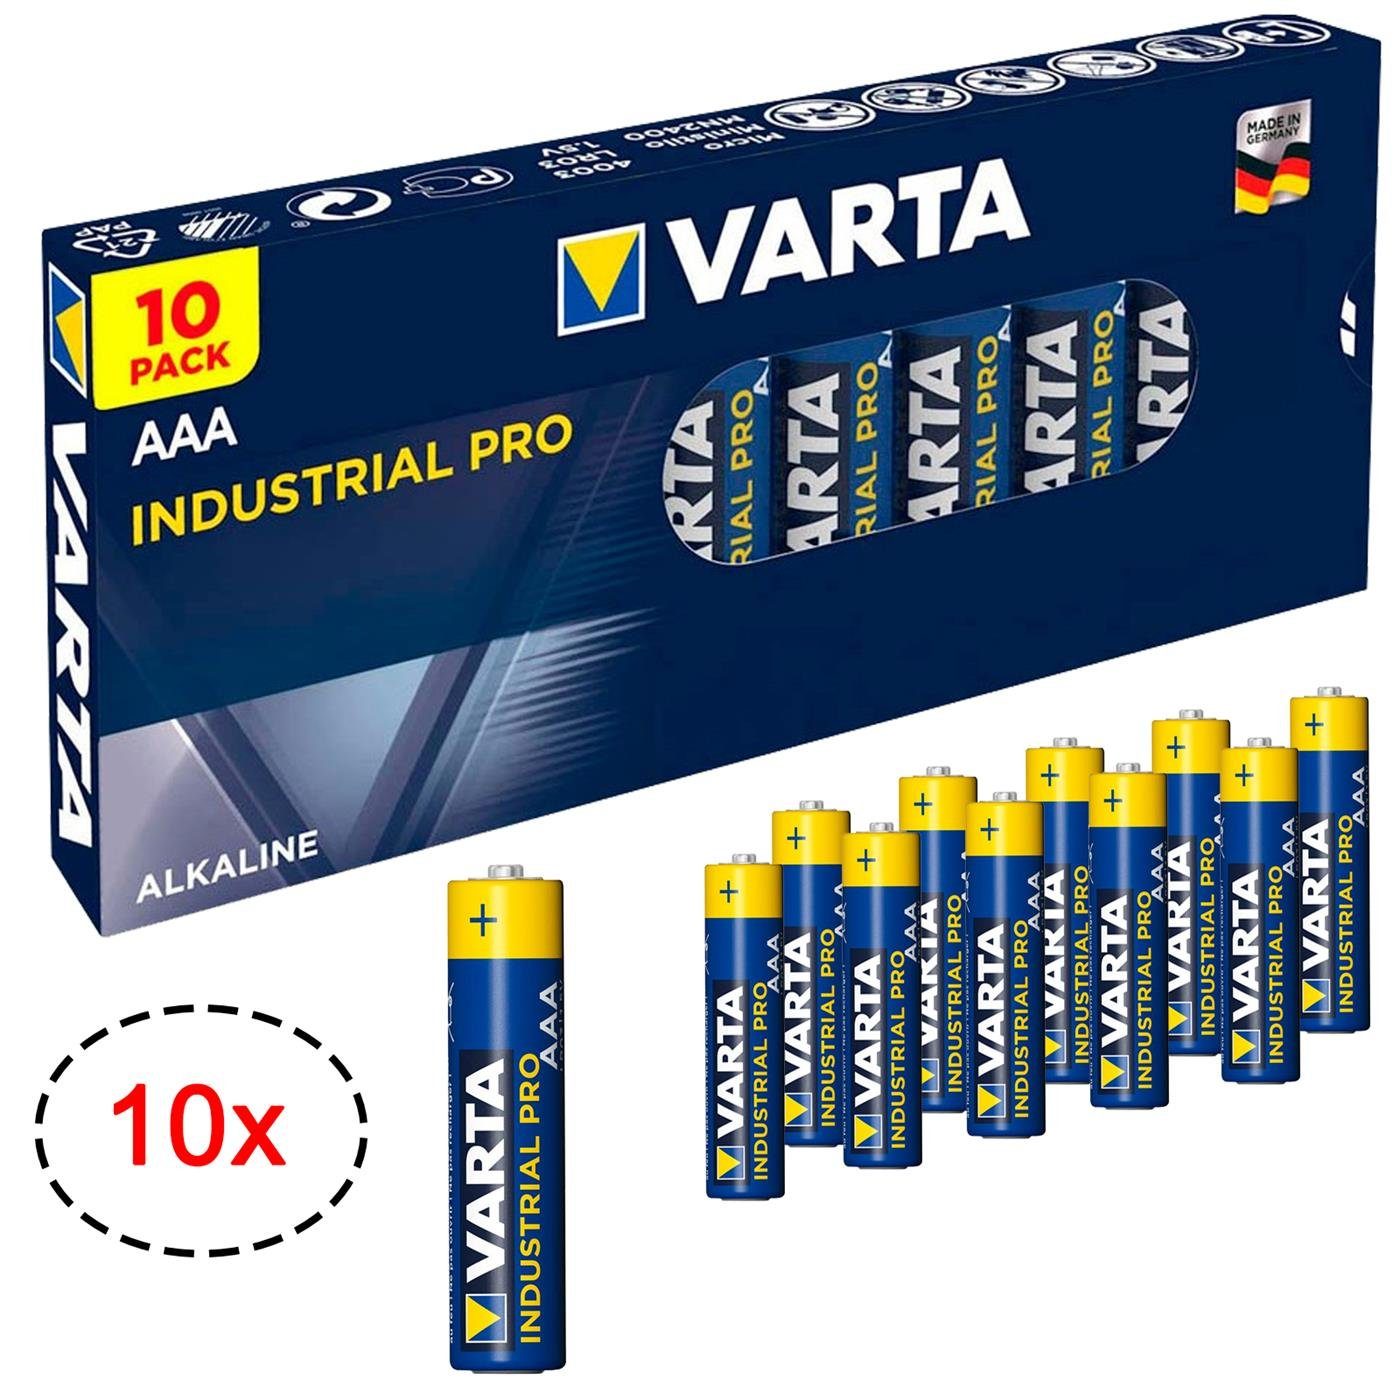 VARTA 10er Pack AAA Industrial Alkaline Micro Batterie, (1,5 V, 10 St), Made in Germany Batterien 1,5V für Taschenlampe Spielzeug Wand Uhr